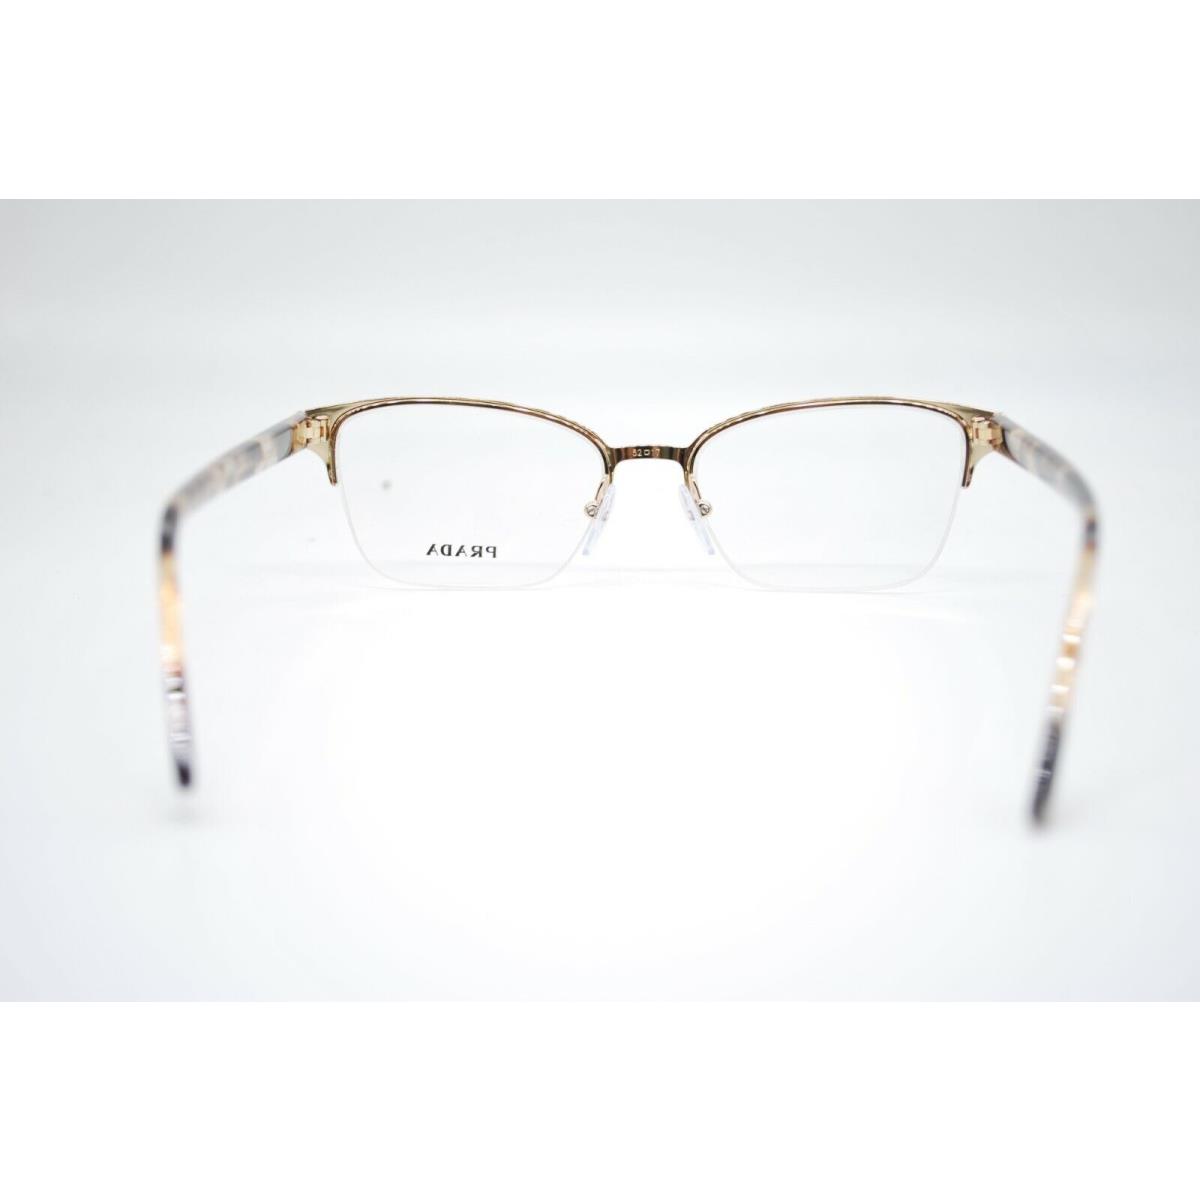 Prada eyeglasses VPR - TOP BORDEAUX/PALE GOLD Frame 3